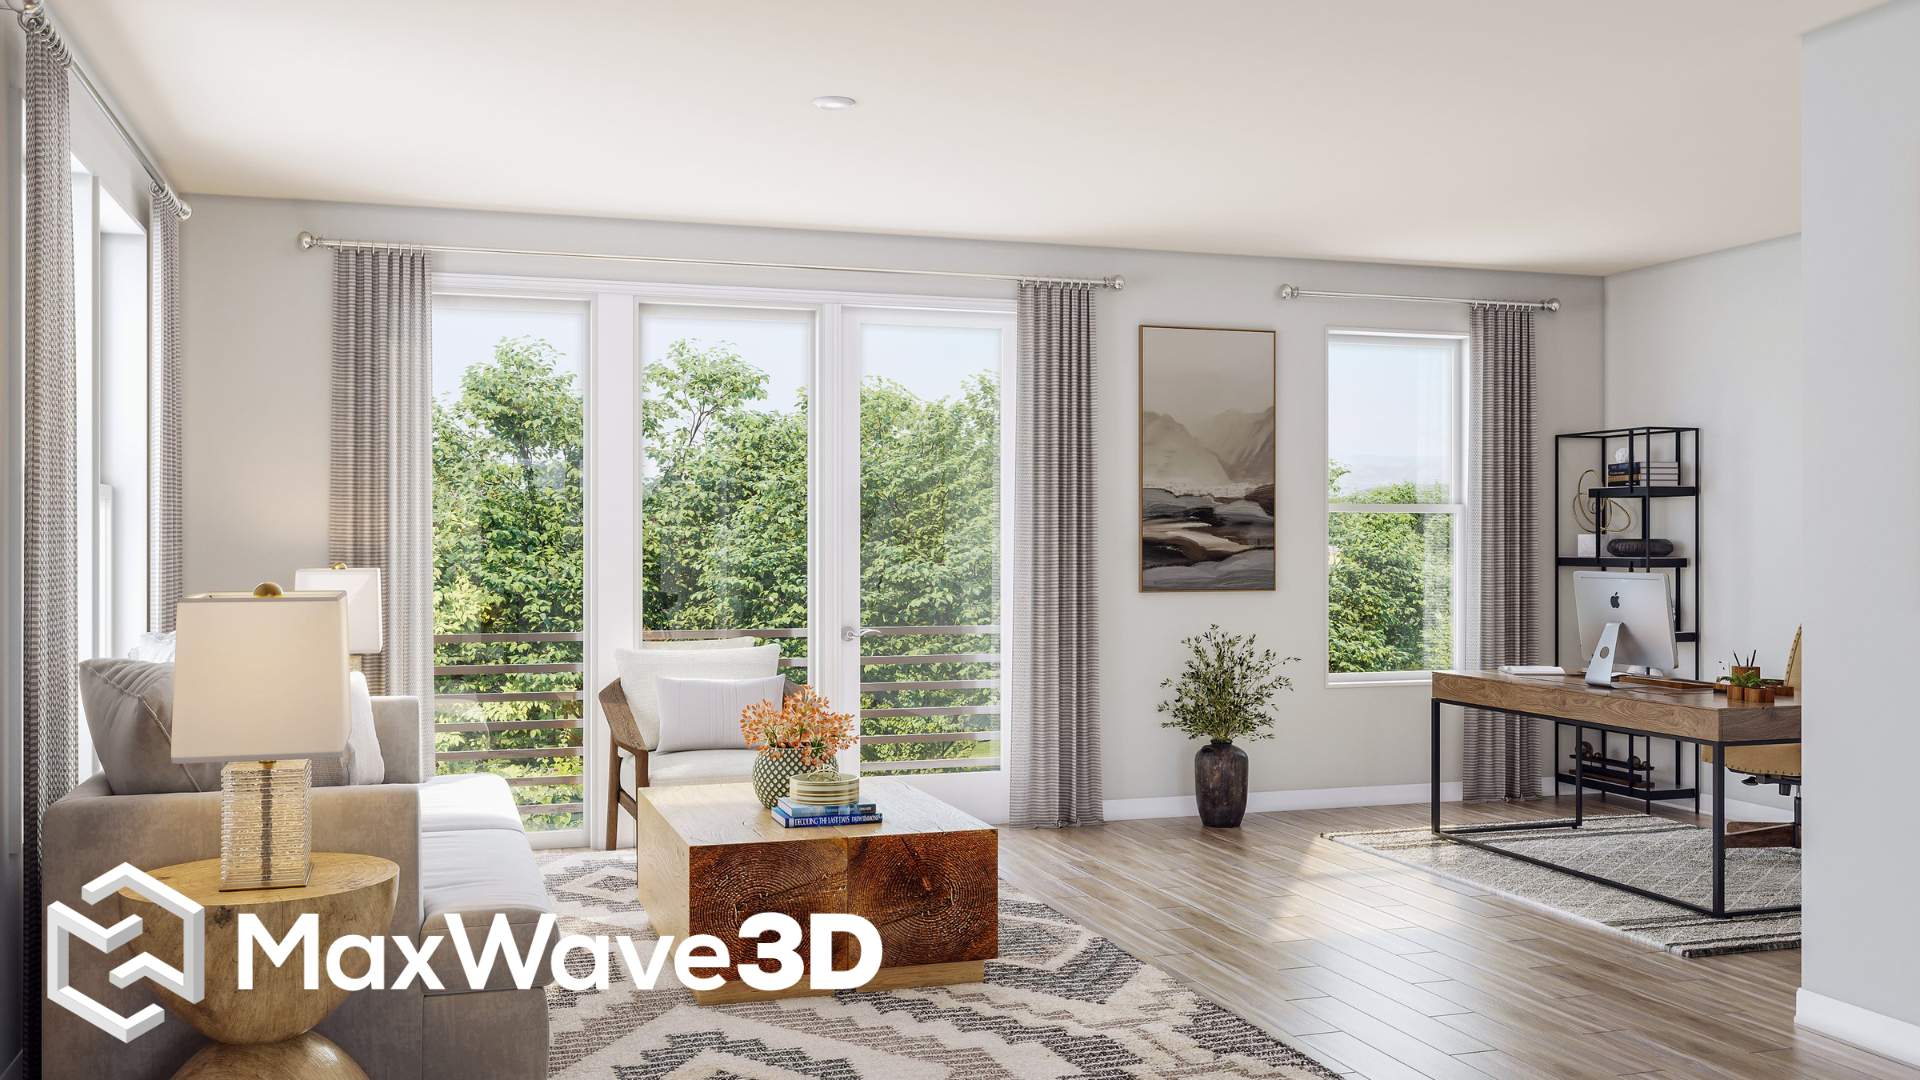 Real Estate Marketing Img 1 - MaxWave3D